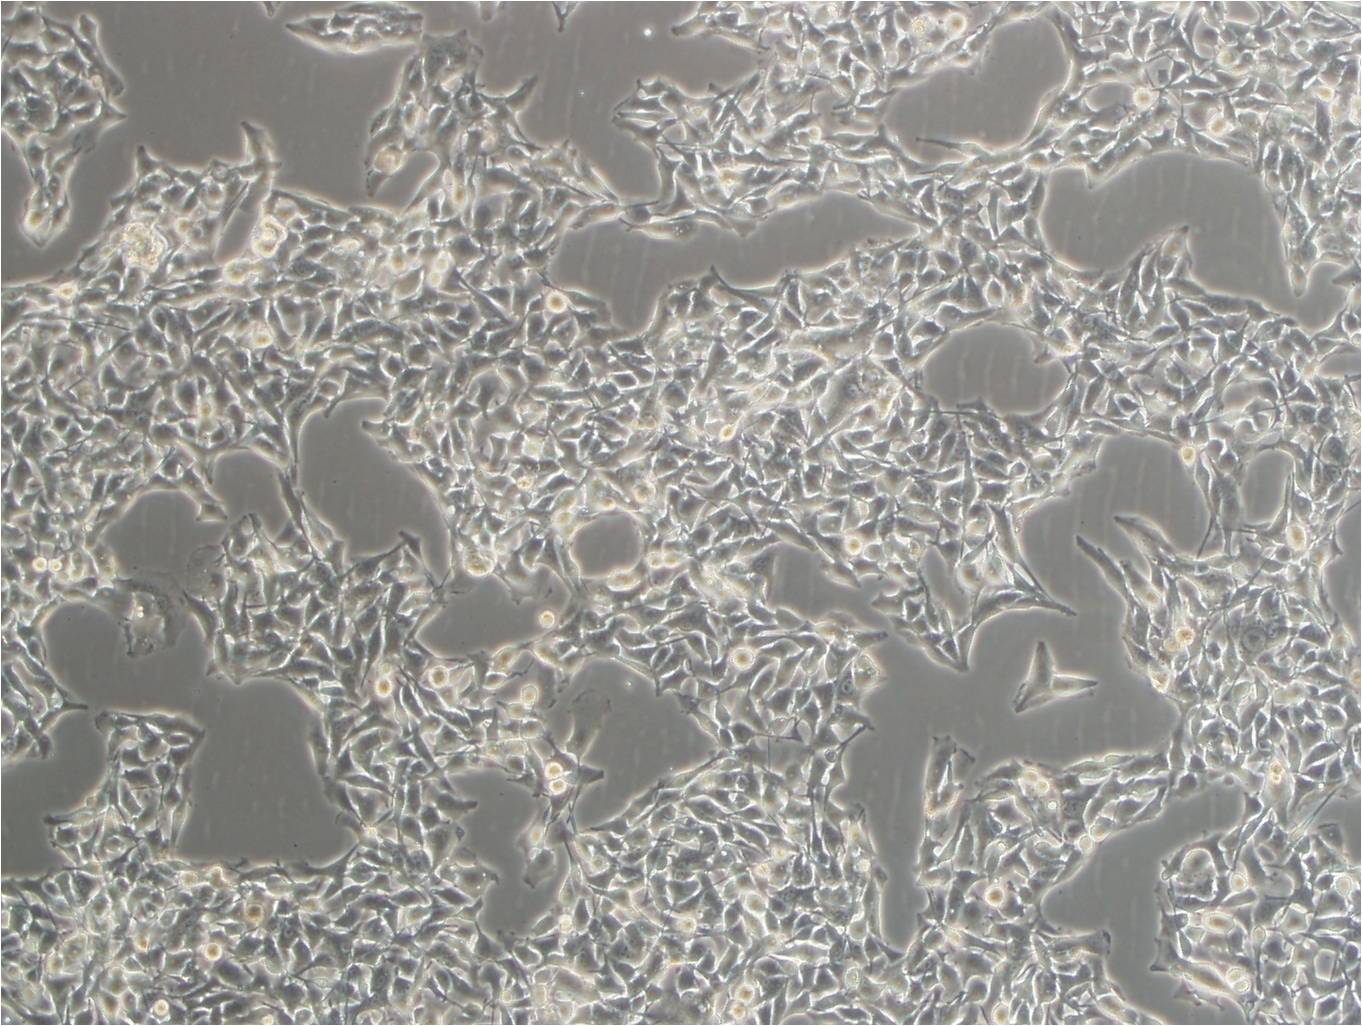 BEL-7402 cell line人肝癌细胞系